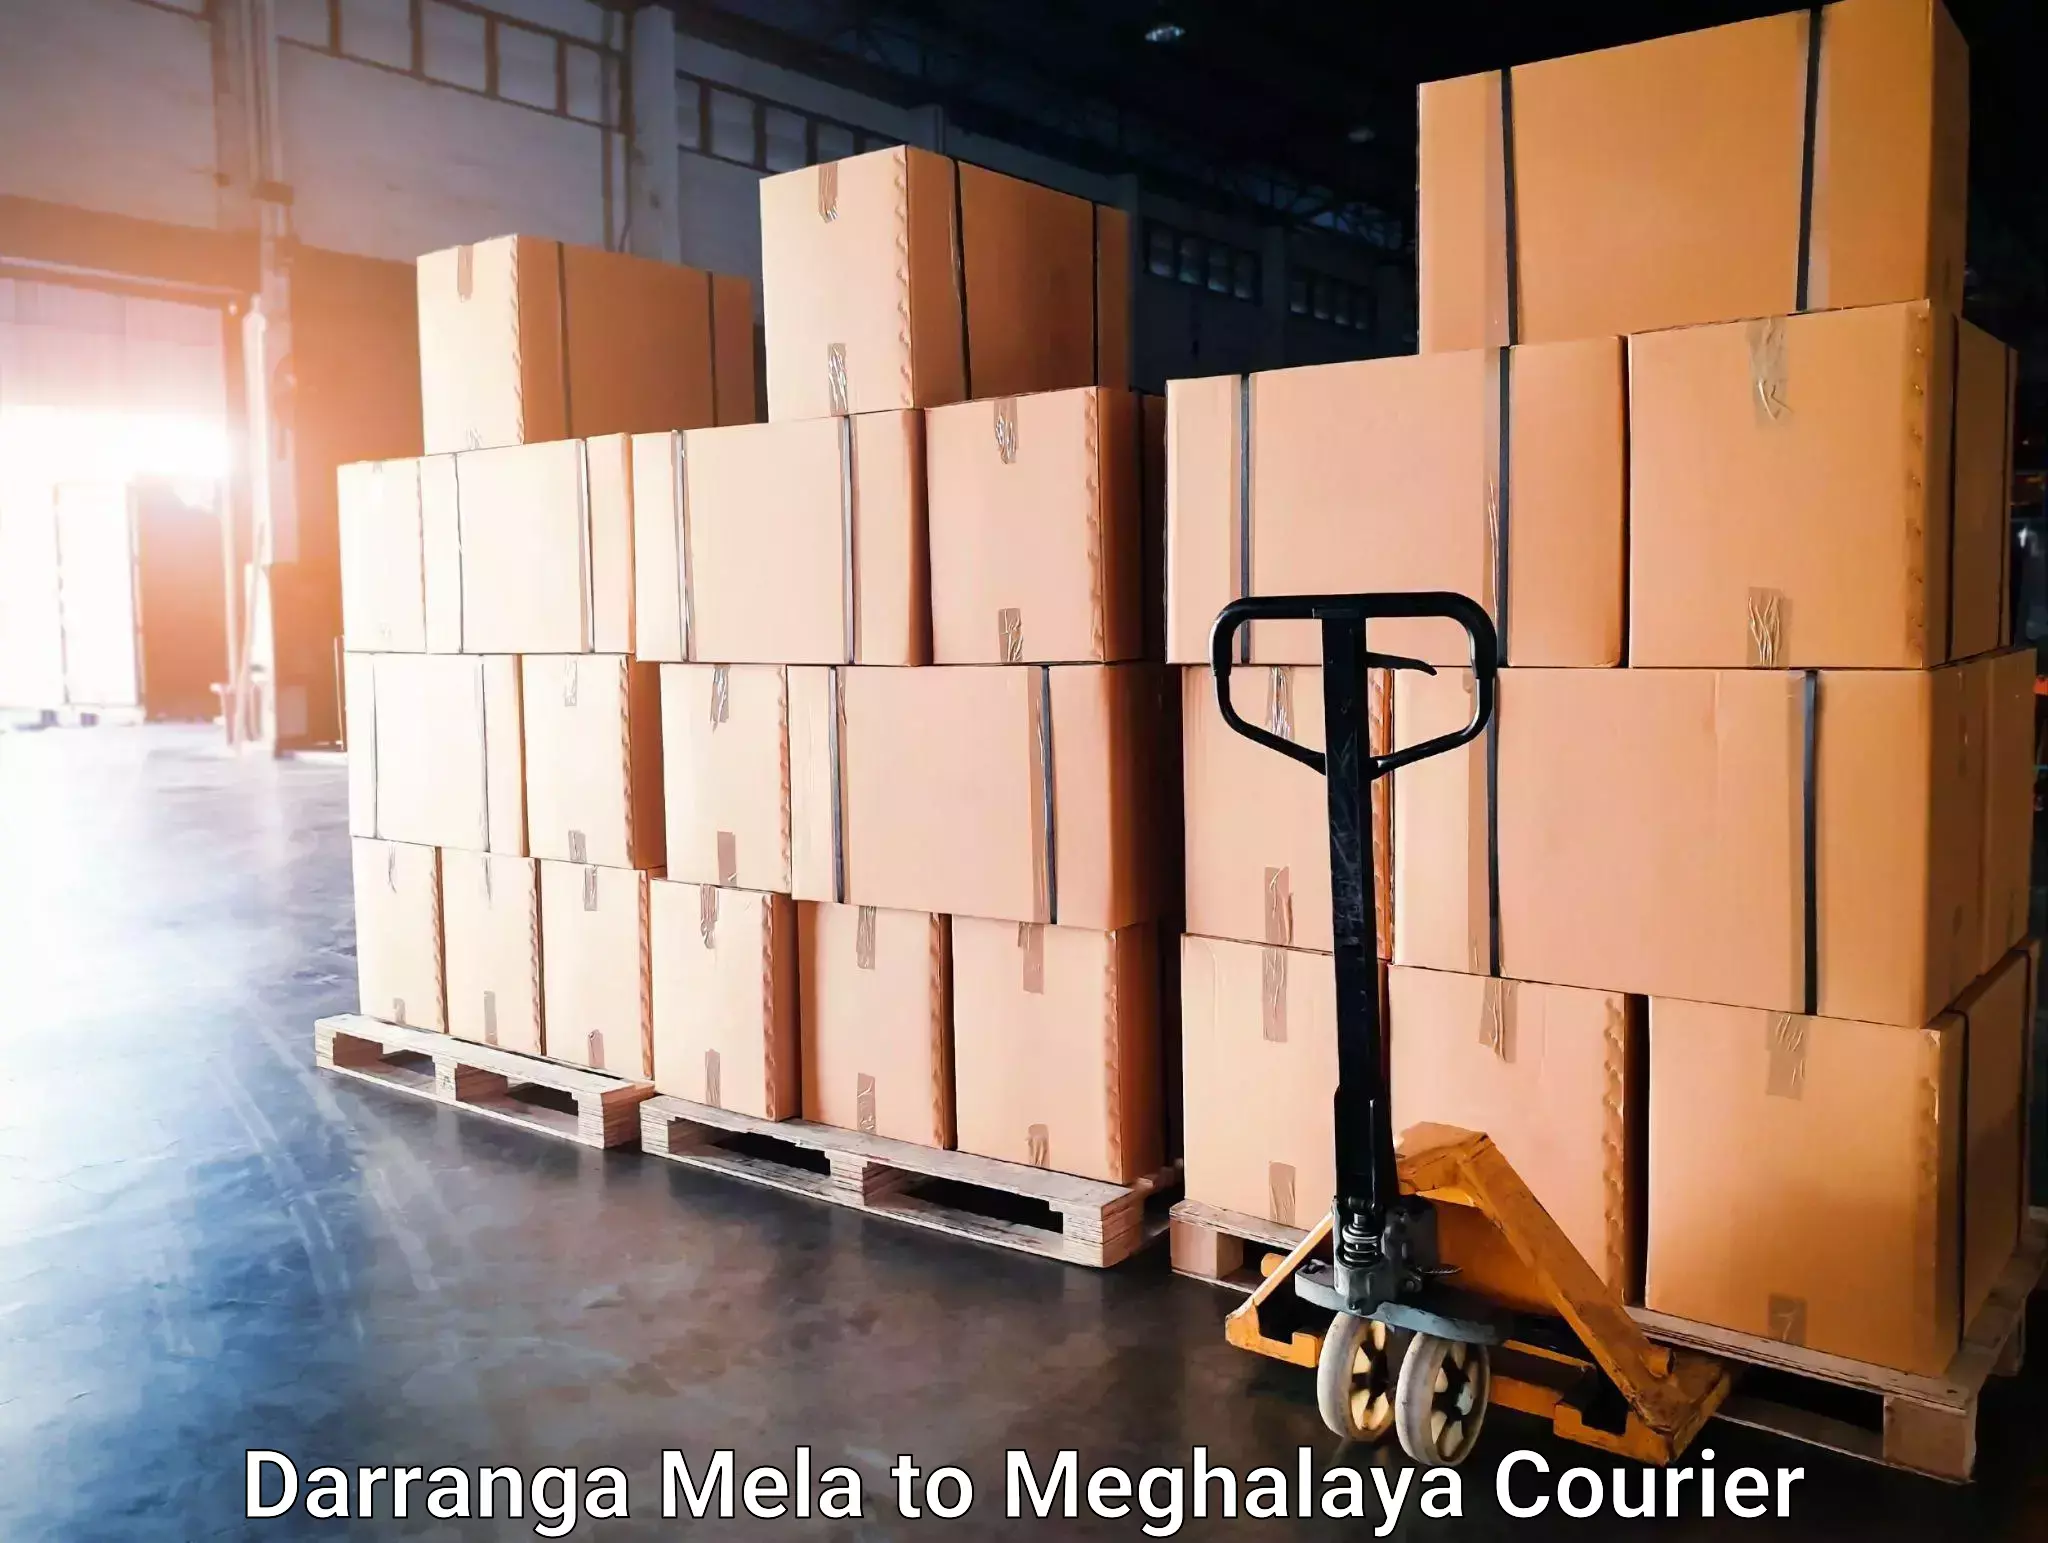 High-performance logistics in Darranga Mela to Jowai